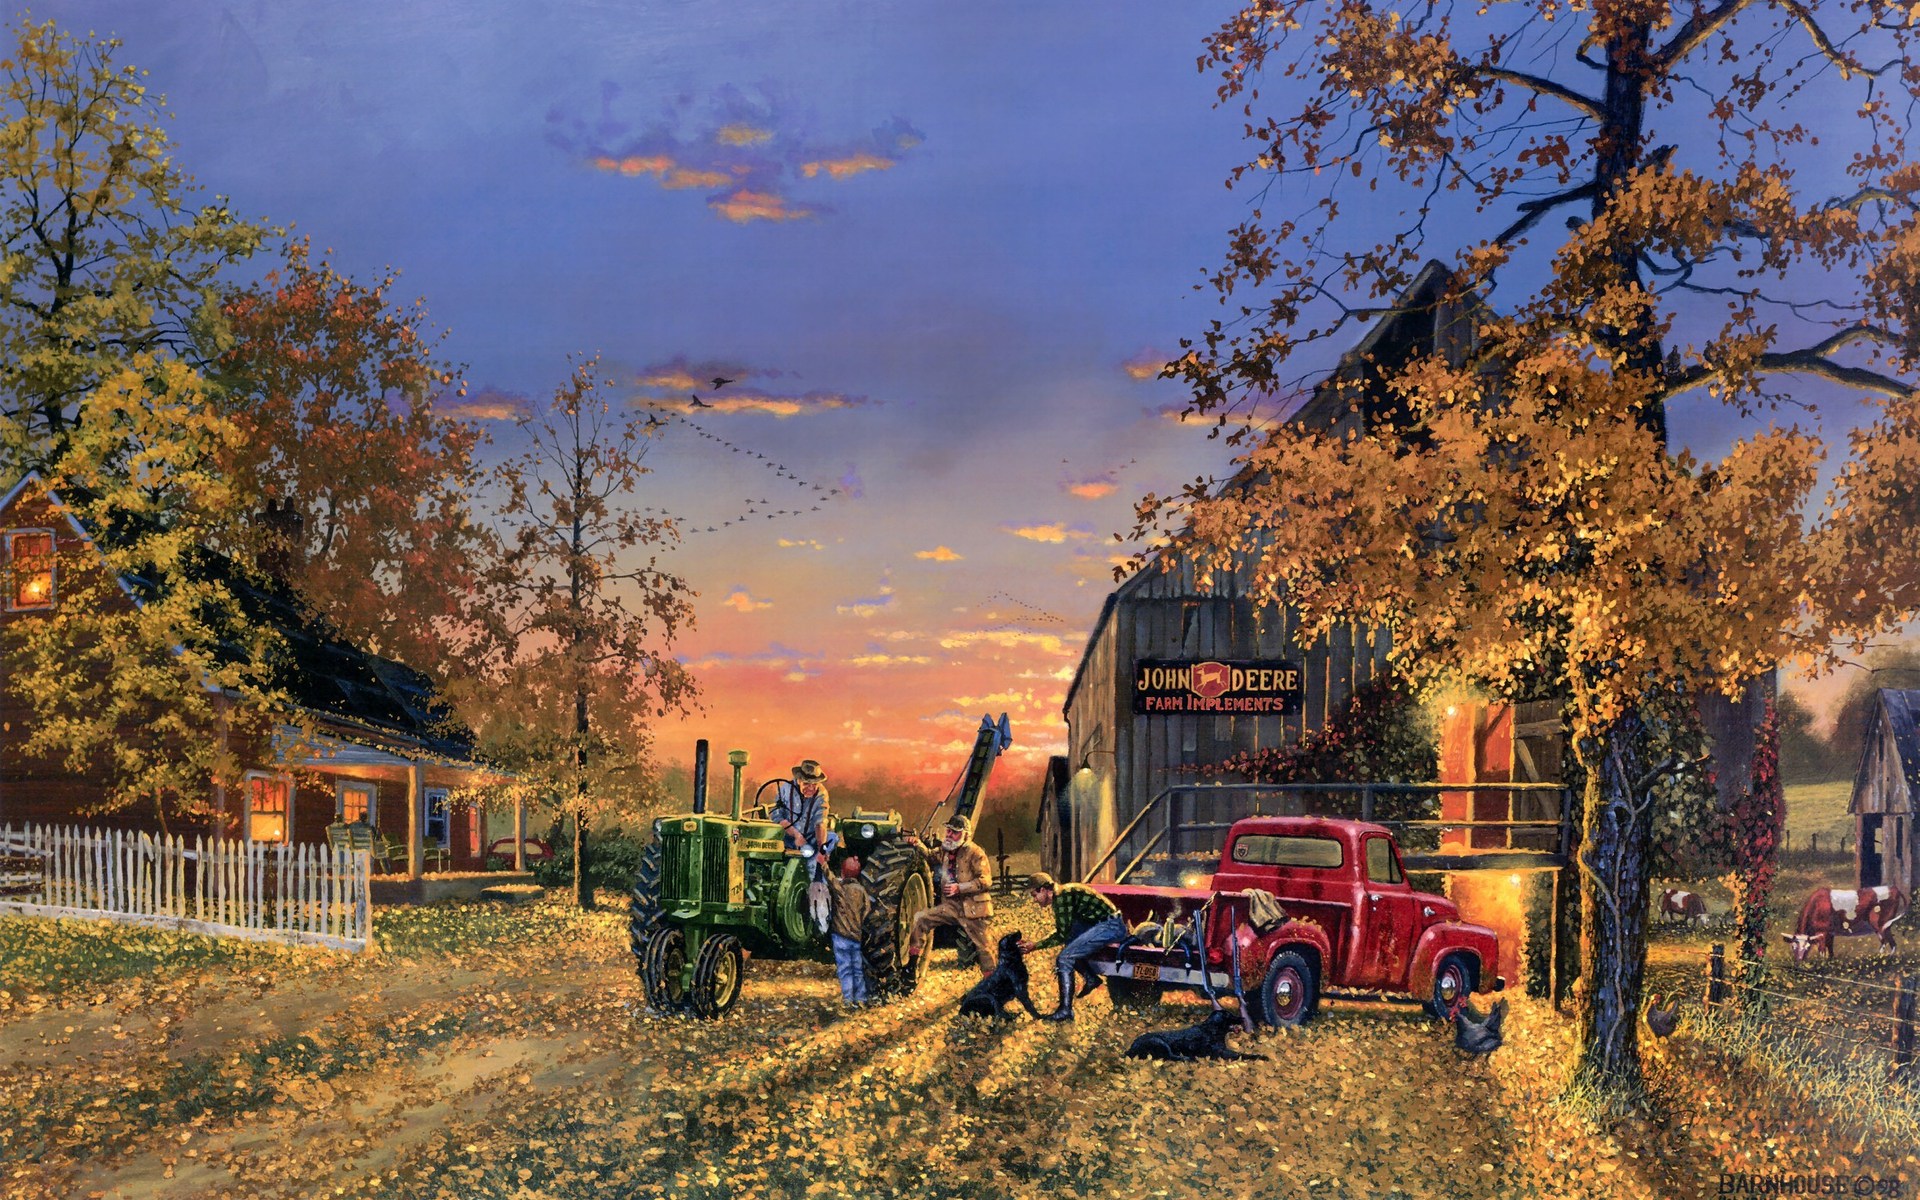  Barnhouse Barnhouse paintings country artistic farm vehicles tractor 1920x1200